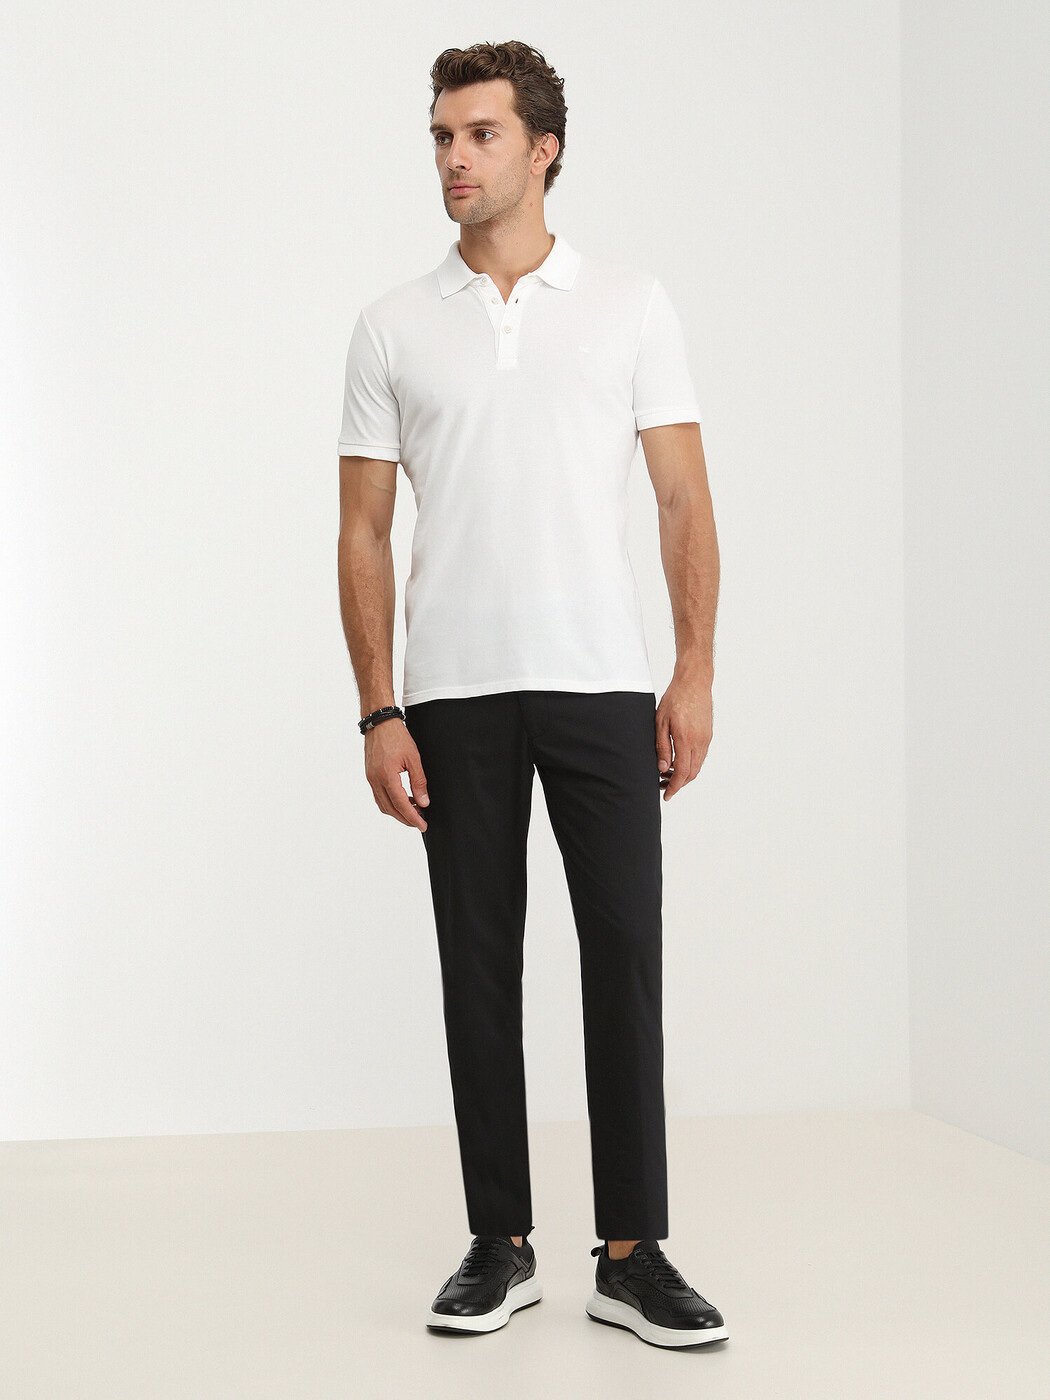 KİP - Beyaz Düz Polo Yaka %100 Pamuk T-Shirt (1)